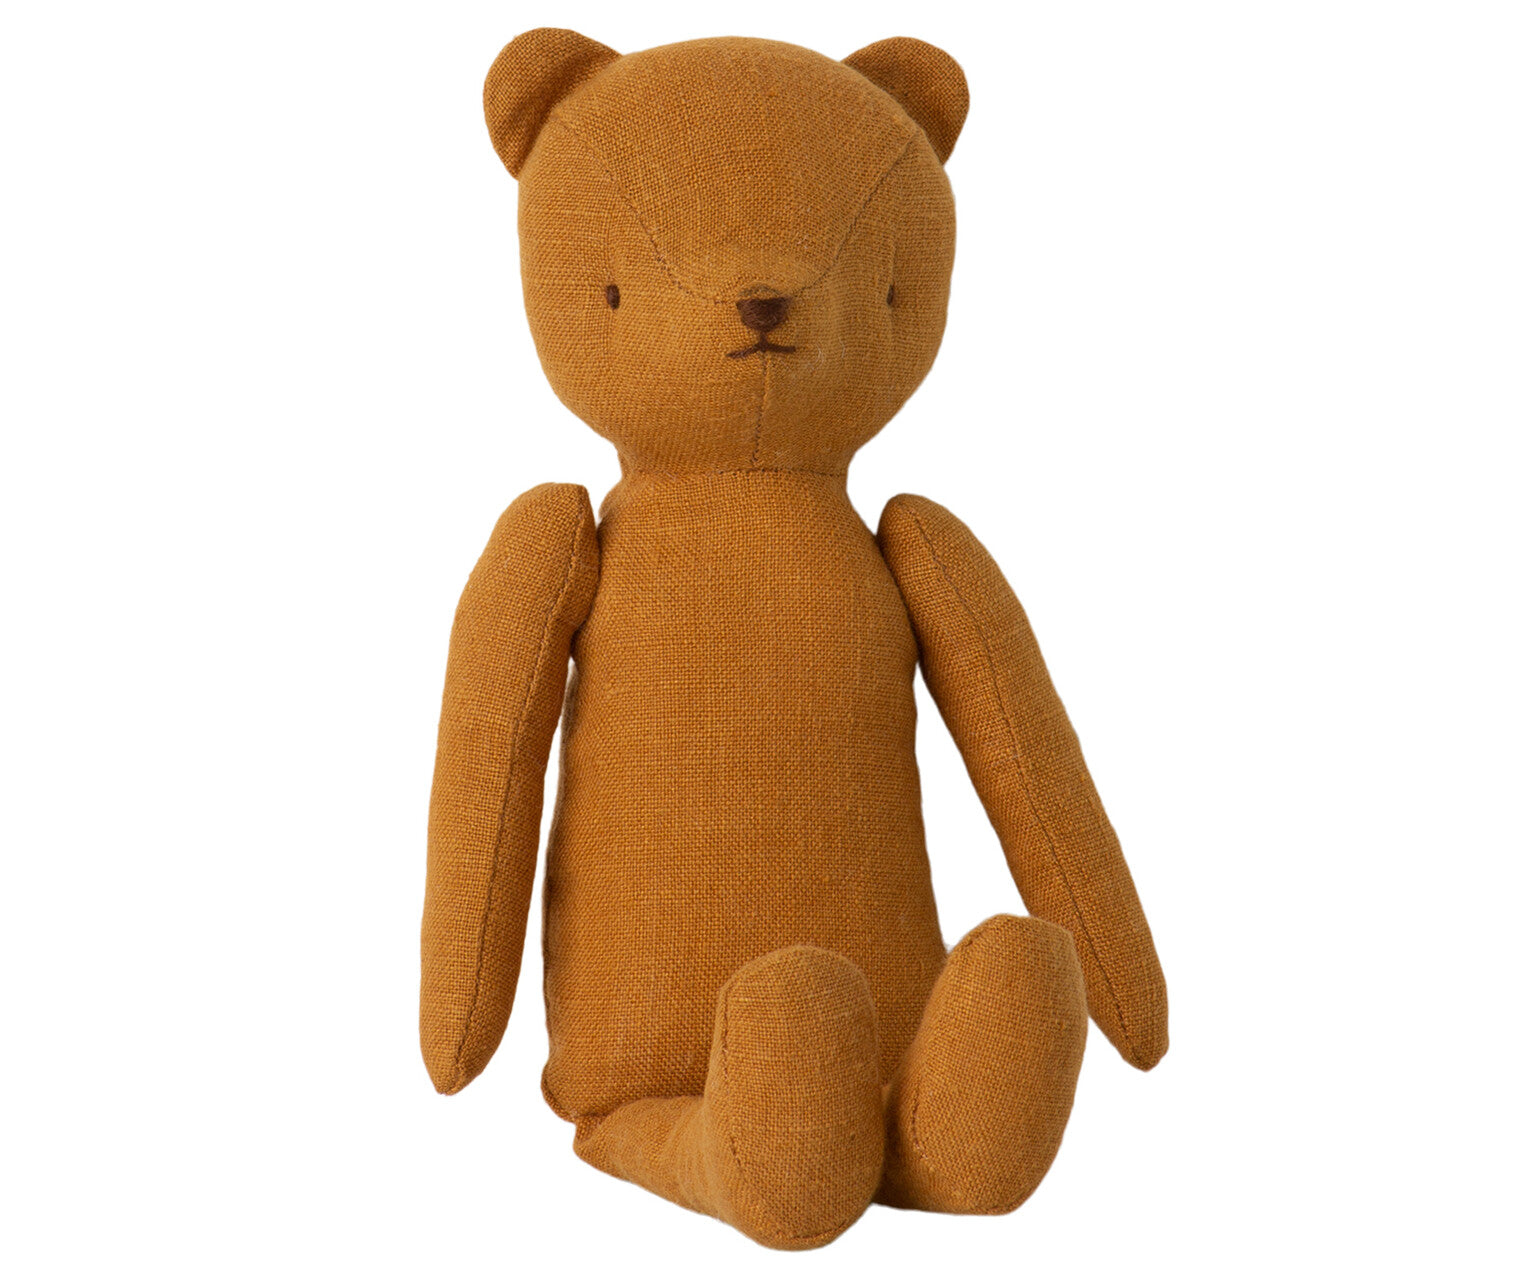 Teddy Mum: Soft Plush Toy Ideal for Kids' Cuddles & Play